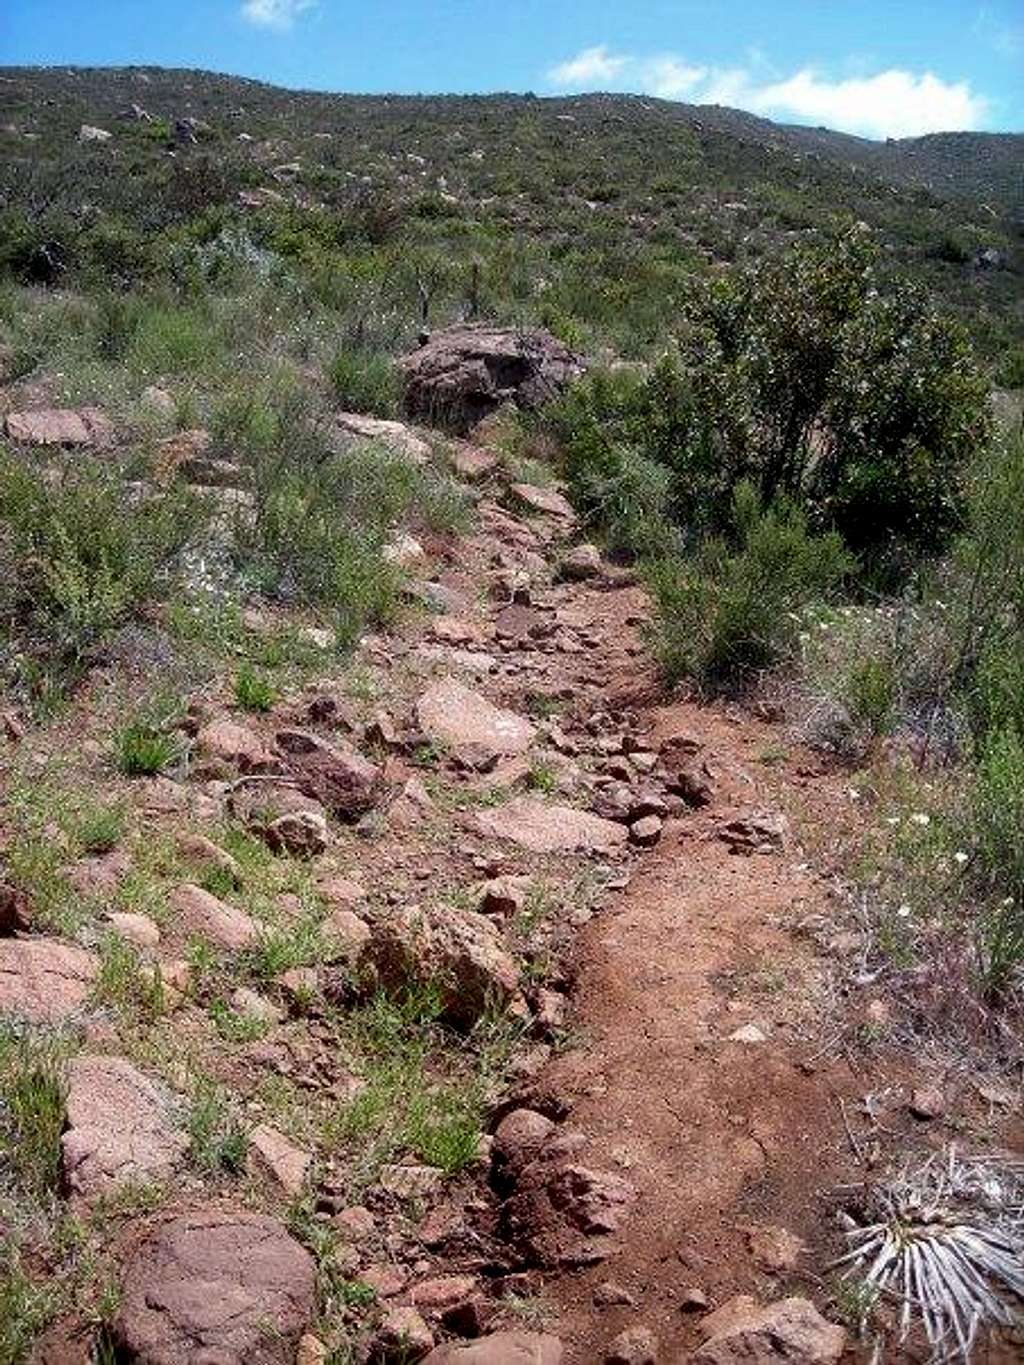 The Viejas Mtn trail